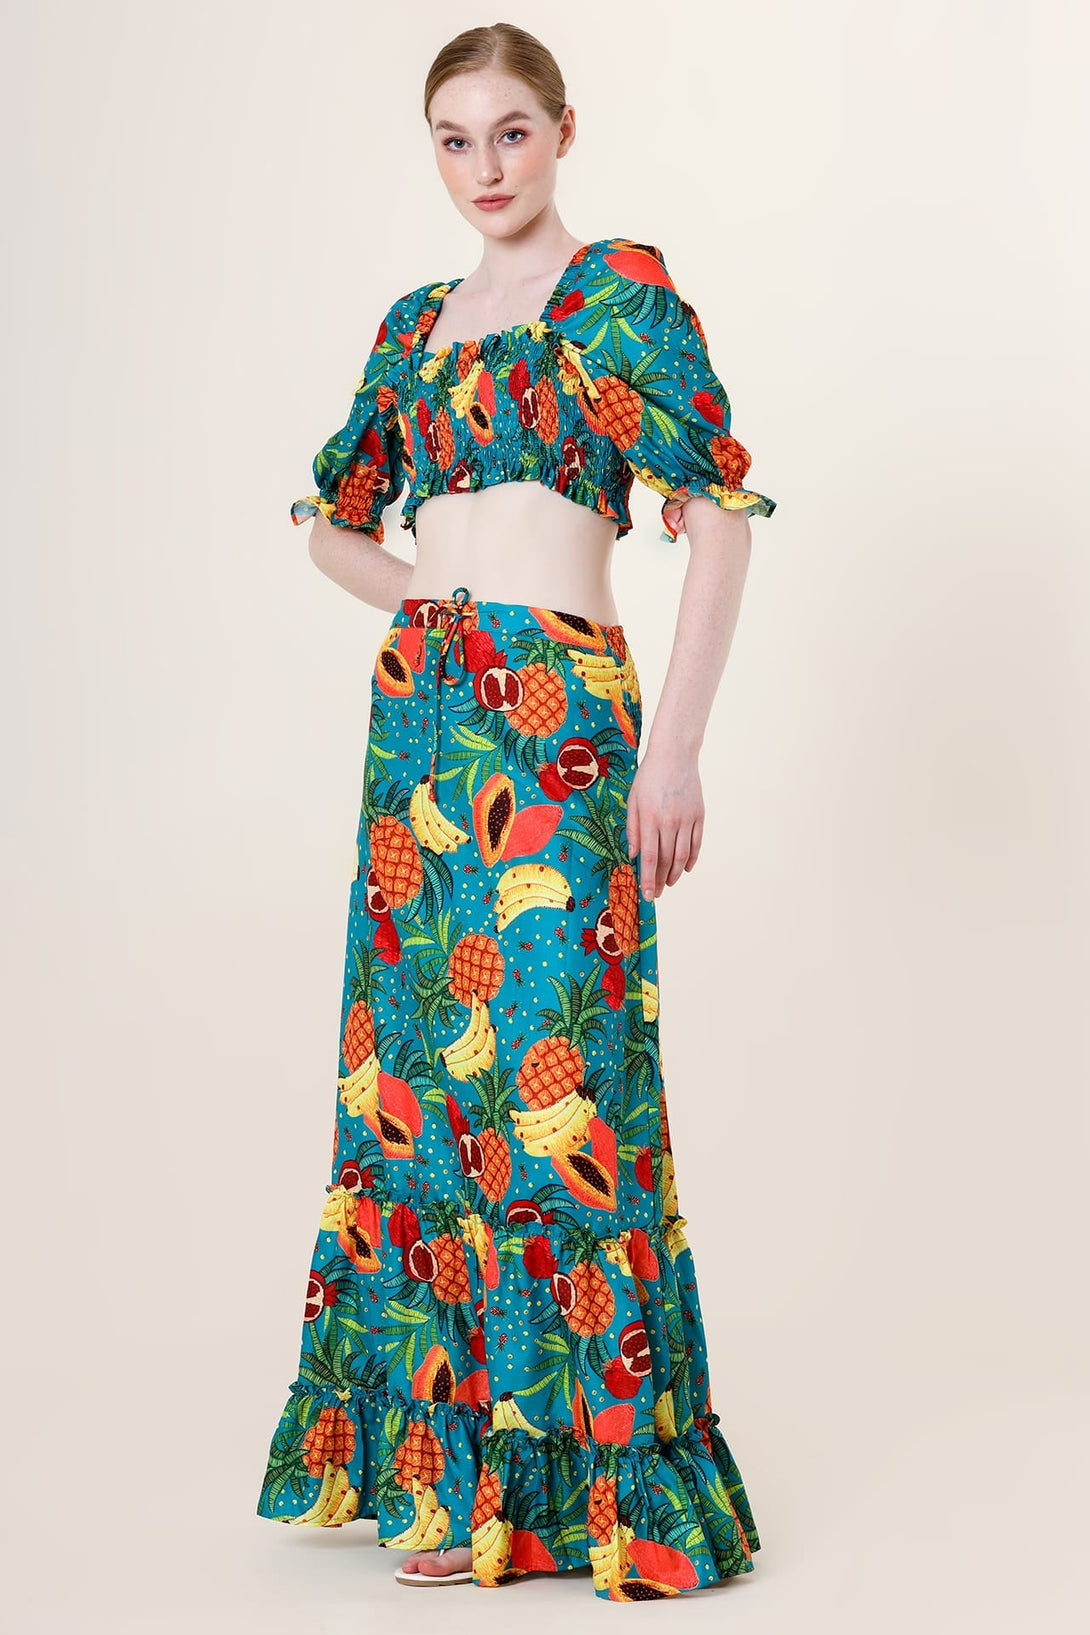 "long cocktail dresses" "multicolor maxi skirt" "multi colored tiered skirt" "maxi skirt for women"